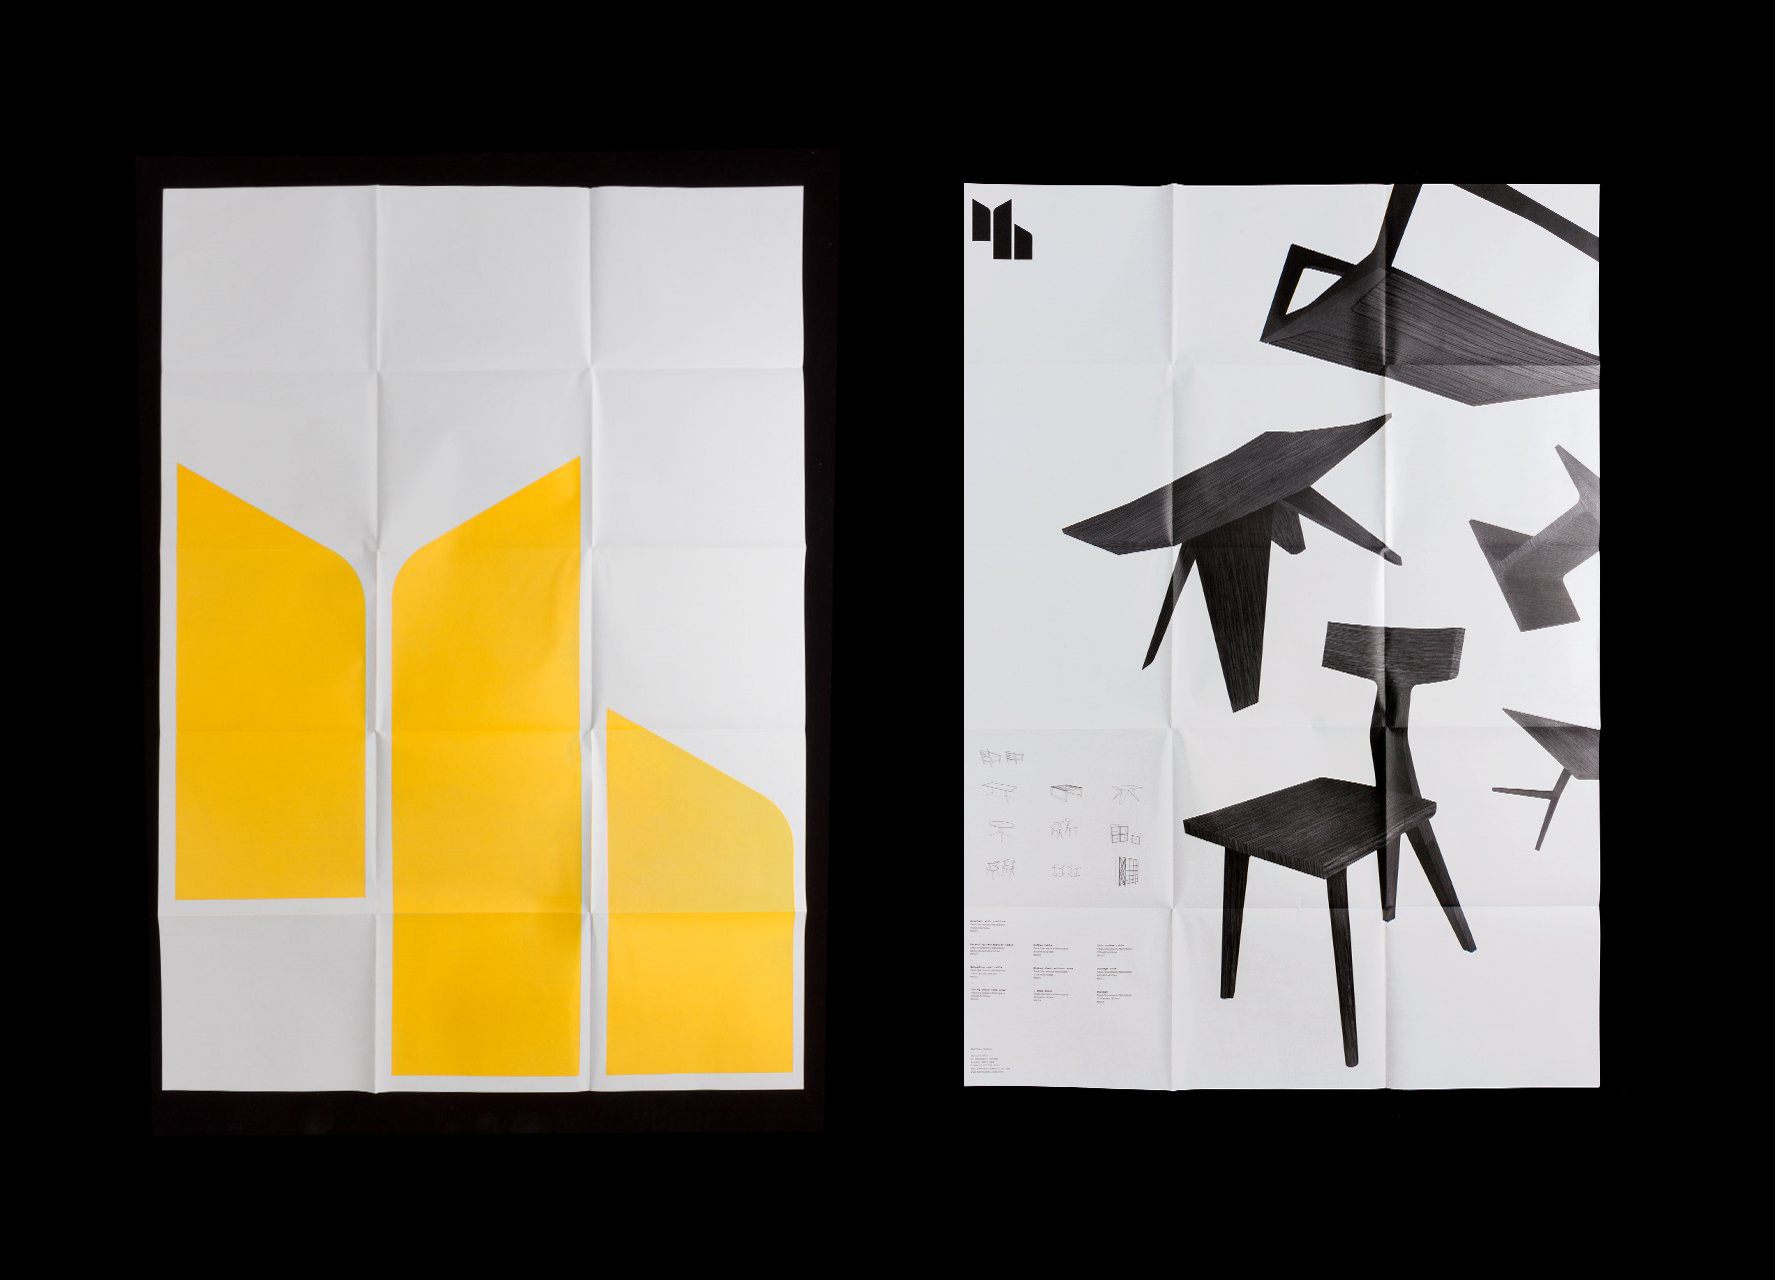 Print by Spin for furniture designer Matthew Hilton